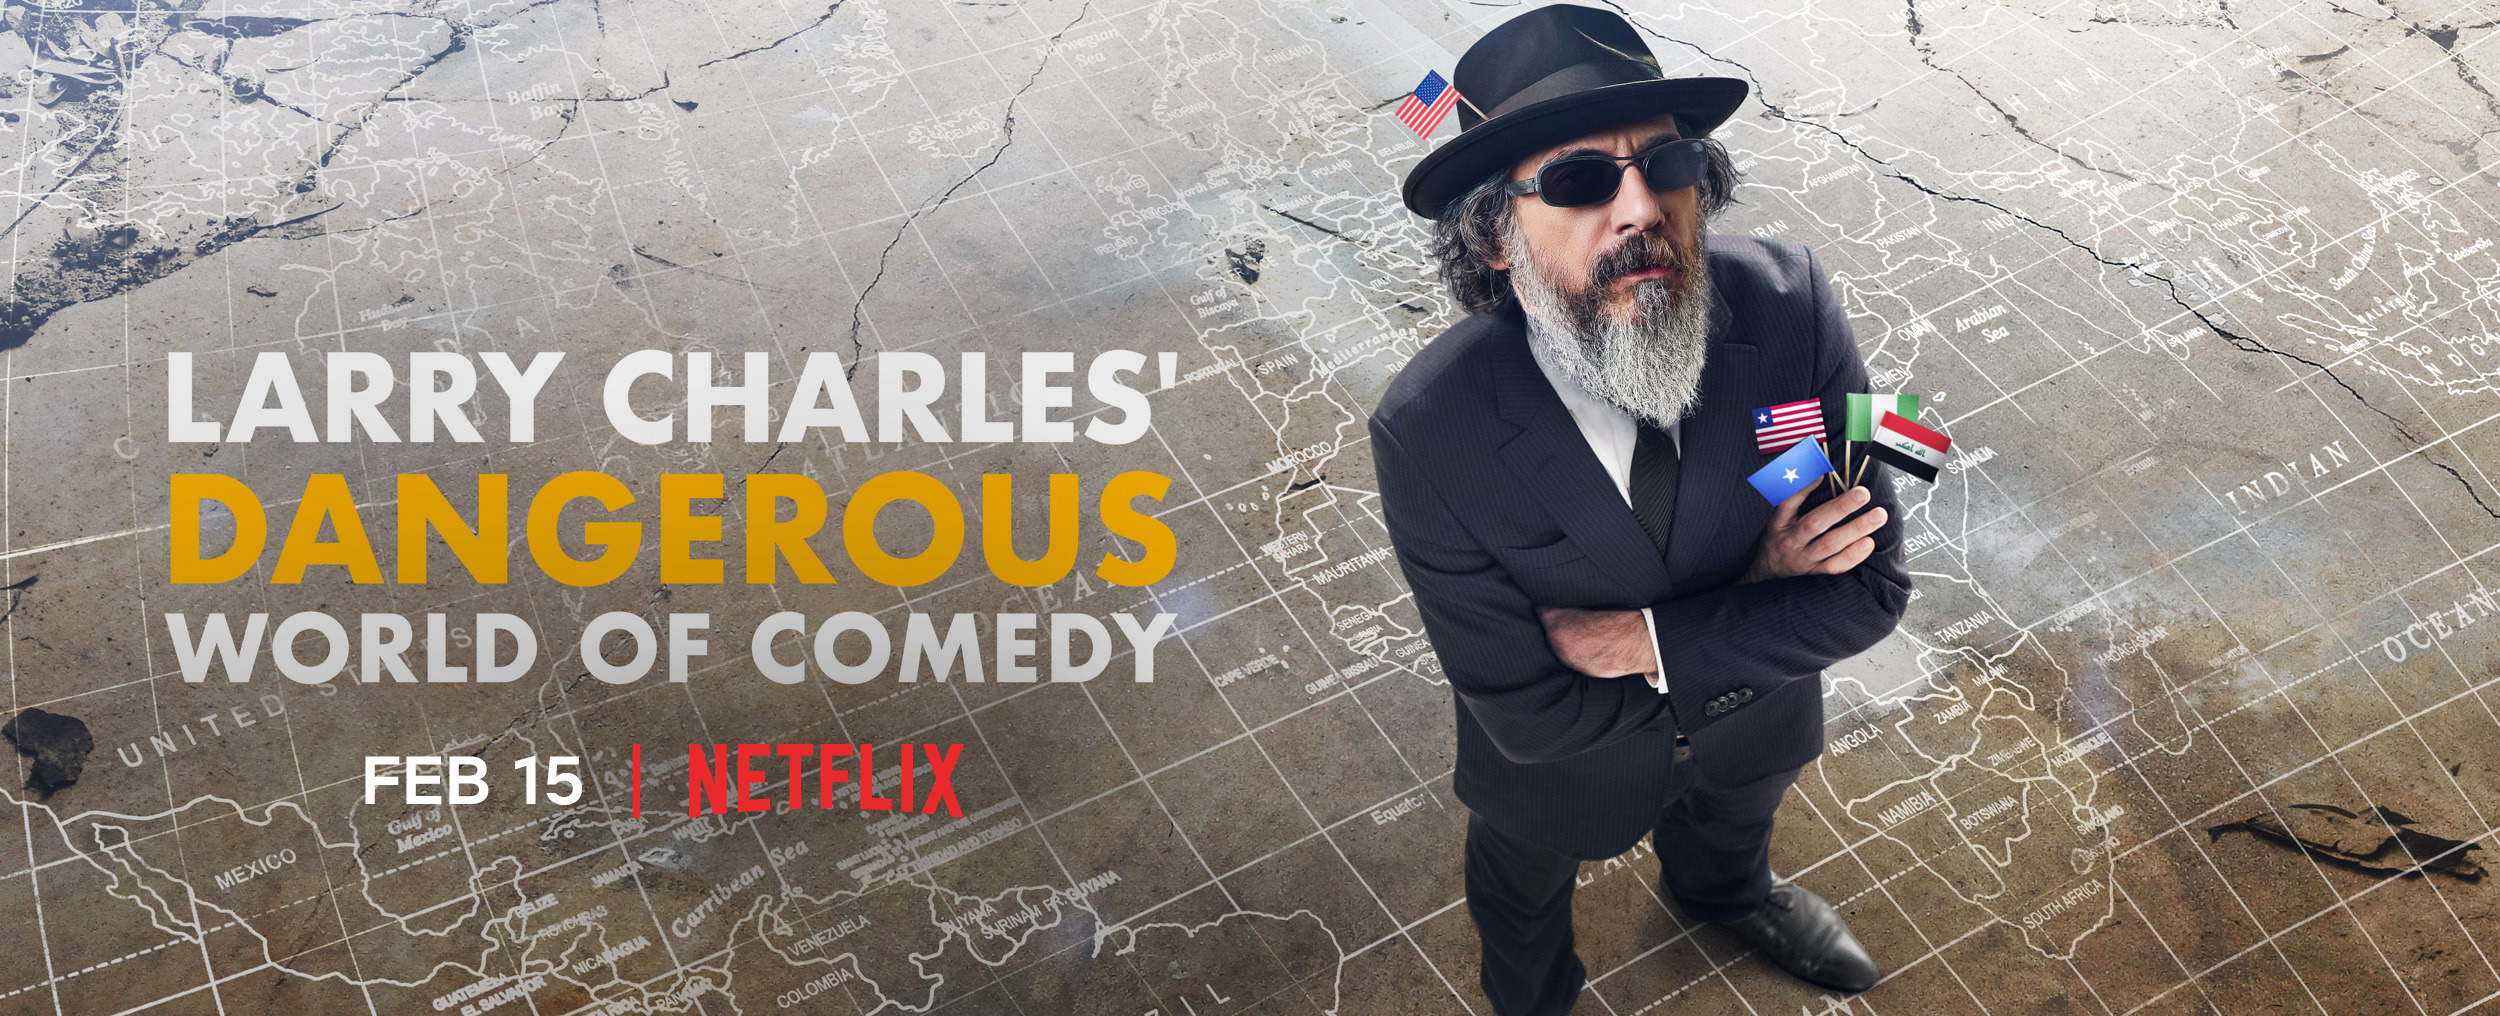 Mega Sized TV Poster Image for Larry Charles' Dangerous World of Comedy 